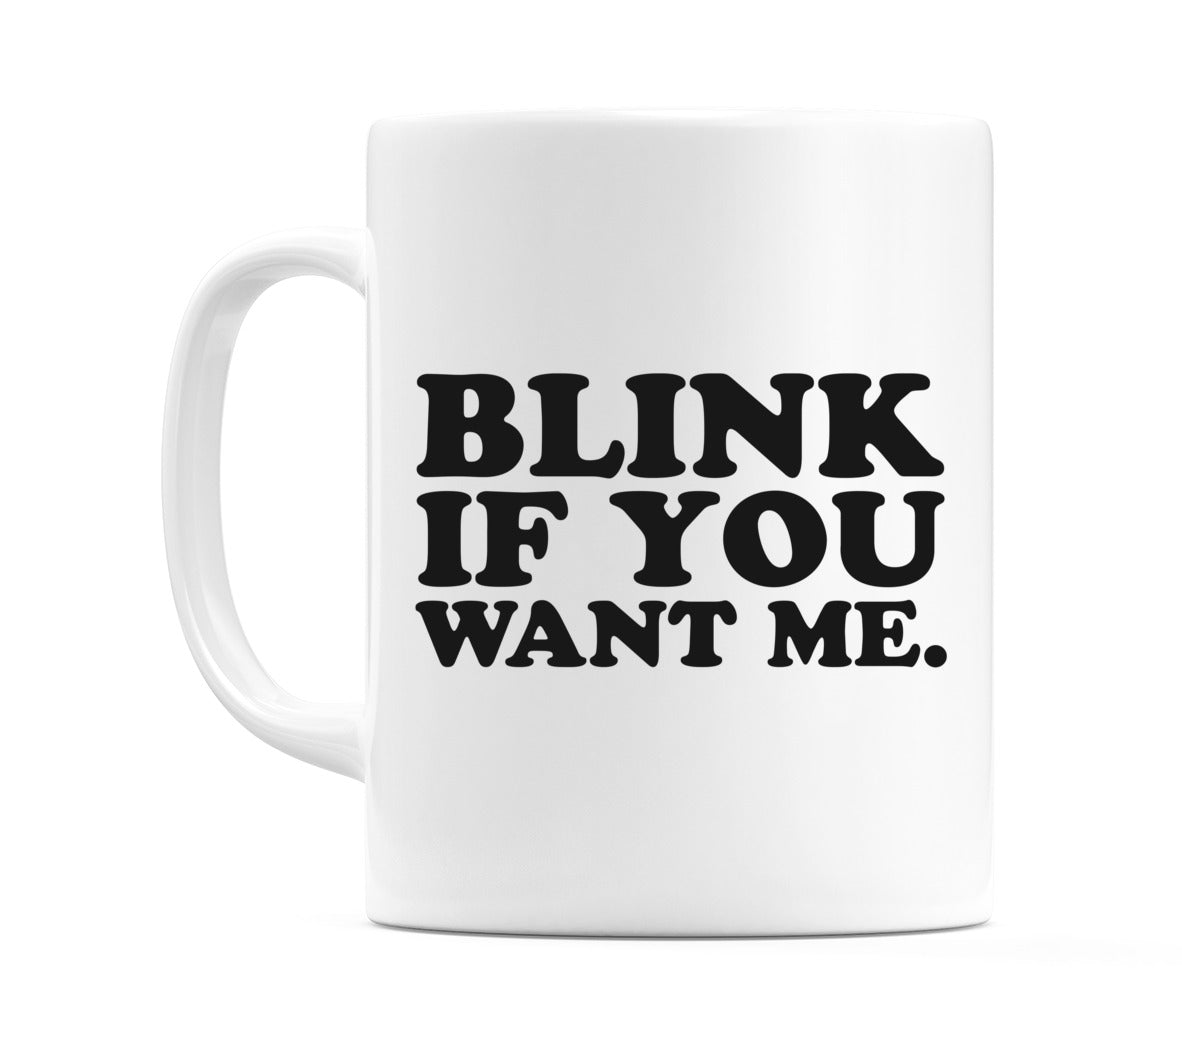 Blink If You Want Me. Mug